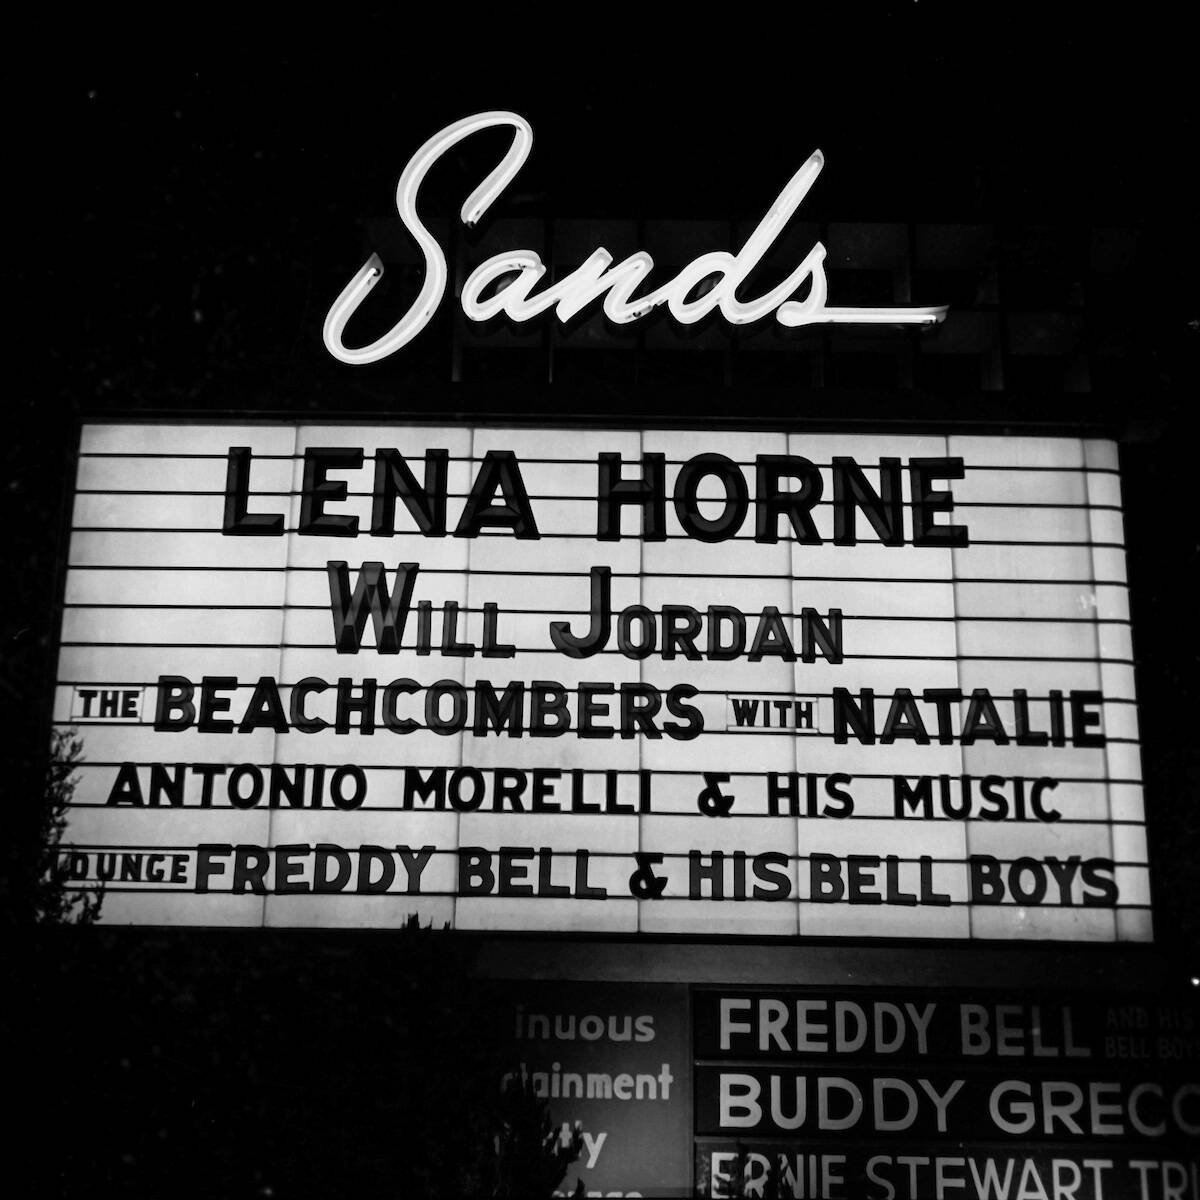 The Sands has Lena Horne and Will Jordan on Dec. 31, 1955. (Las Vegas News Bureau)